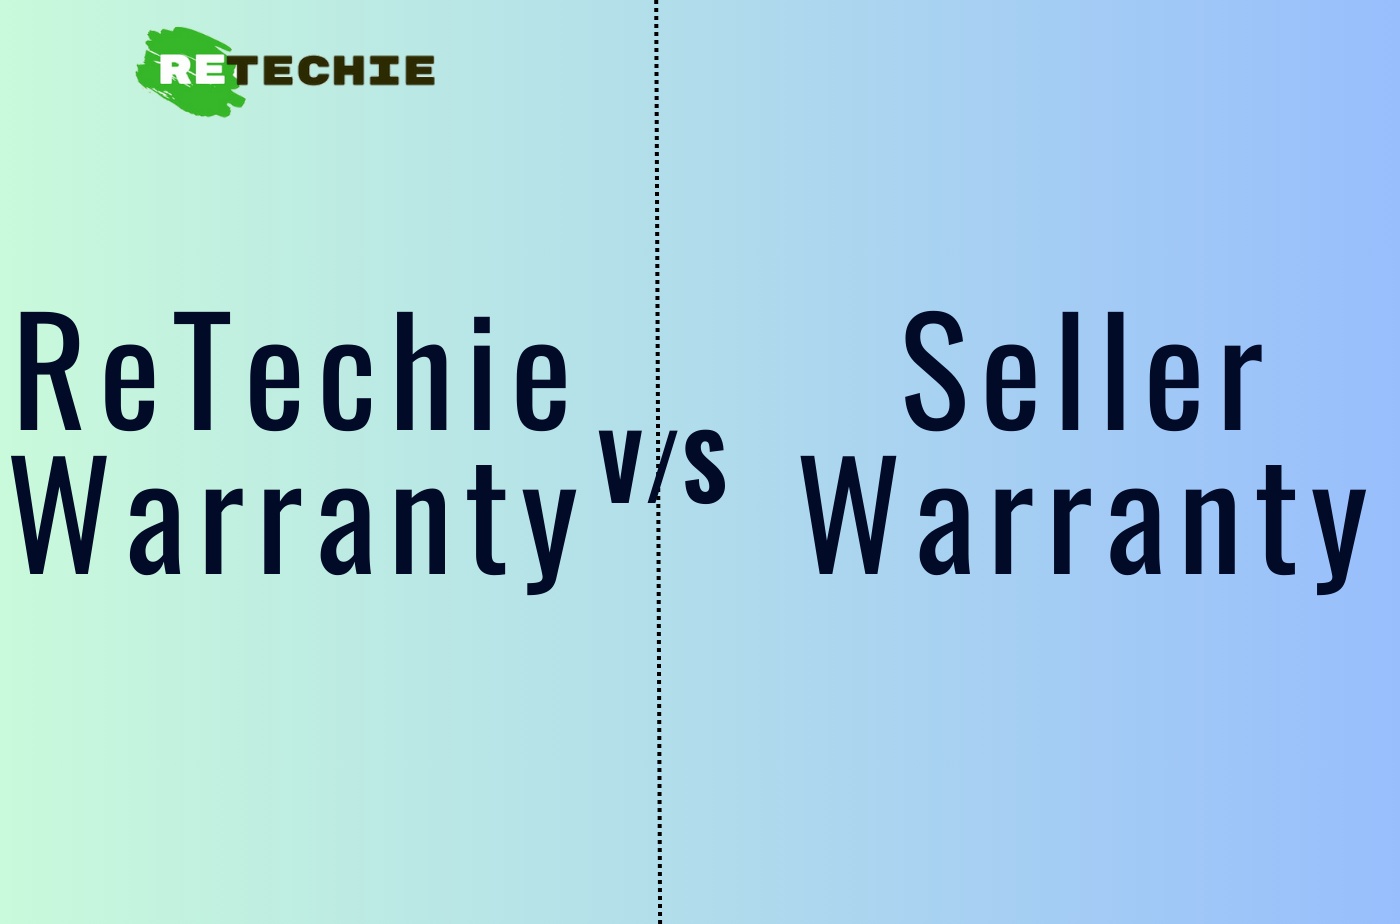 Comparison ReTechie Warranty Vs Other Companies Seller Warranty